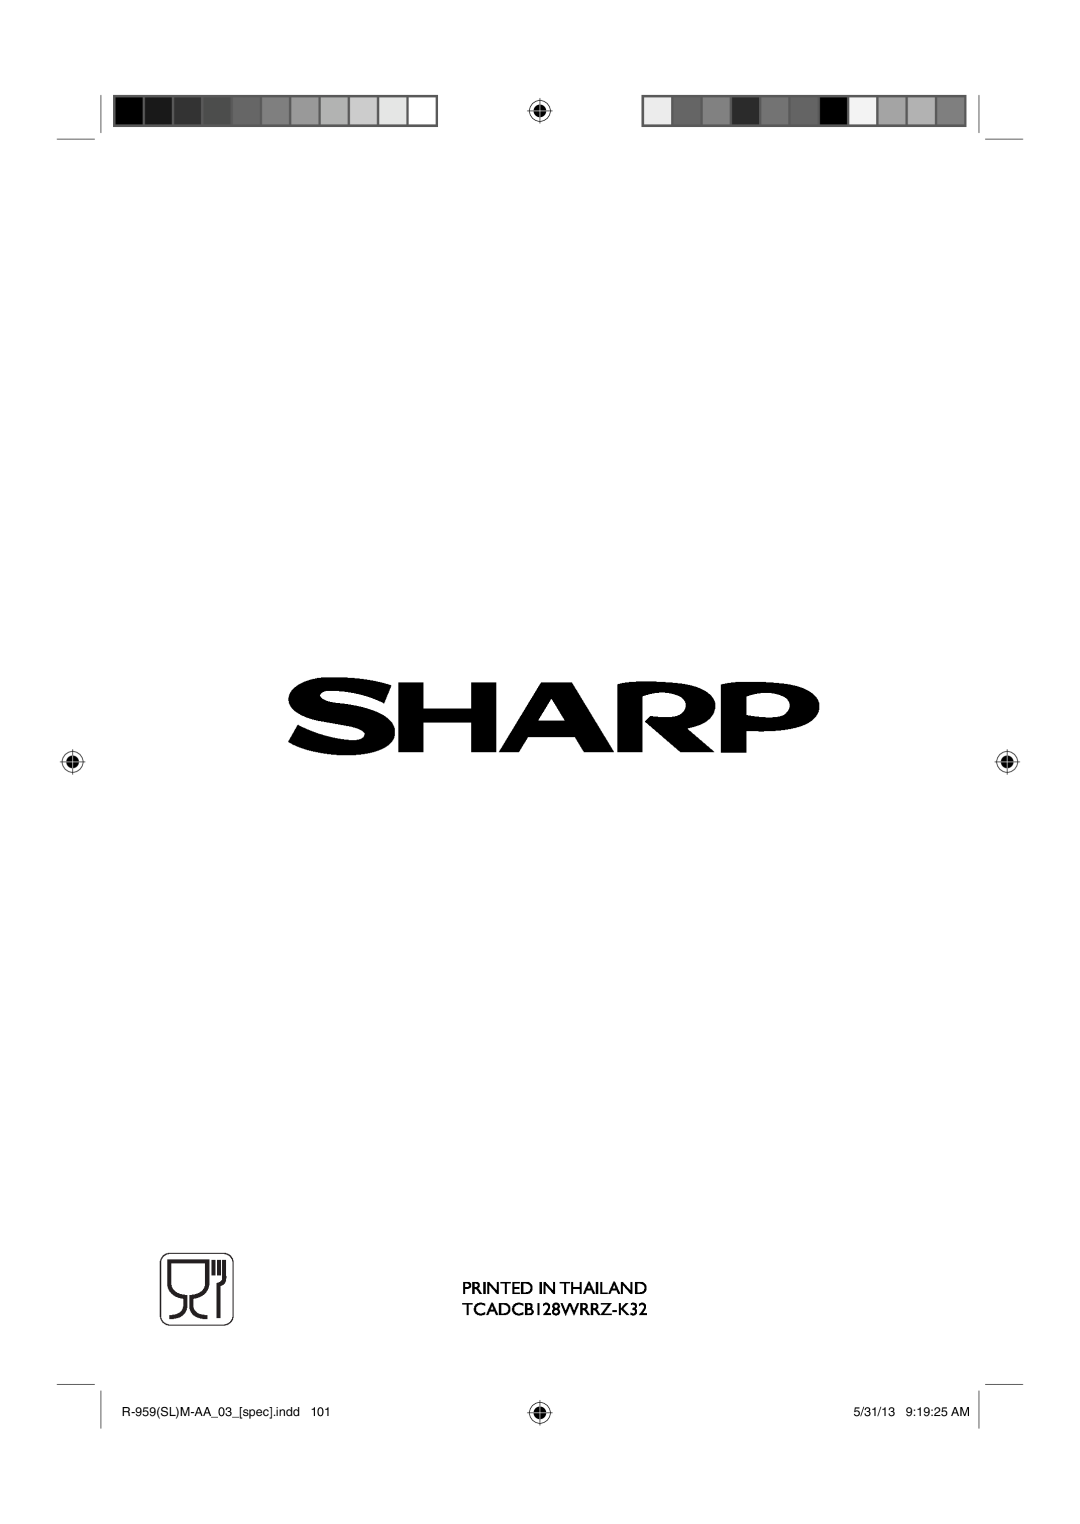 Sharp R-959(SL)M-AA manual PRINTED IN THAILAND TCADCB128WRRZ-K32, R-959SLM-AA03spec.indd, 5/31/13 91925 AM 